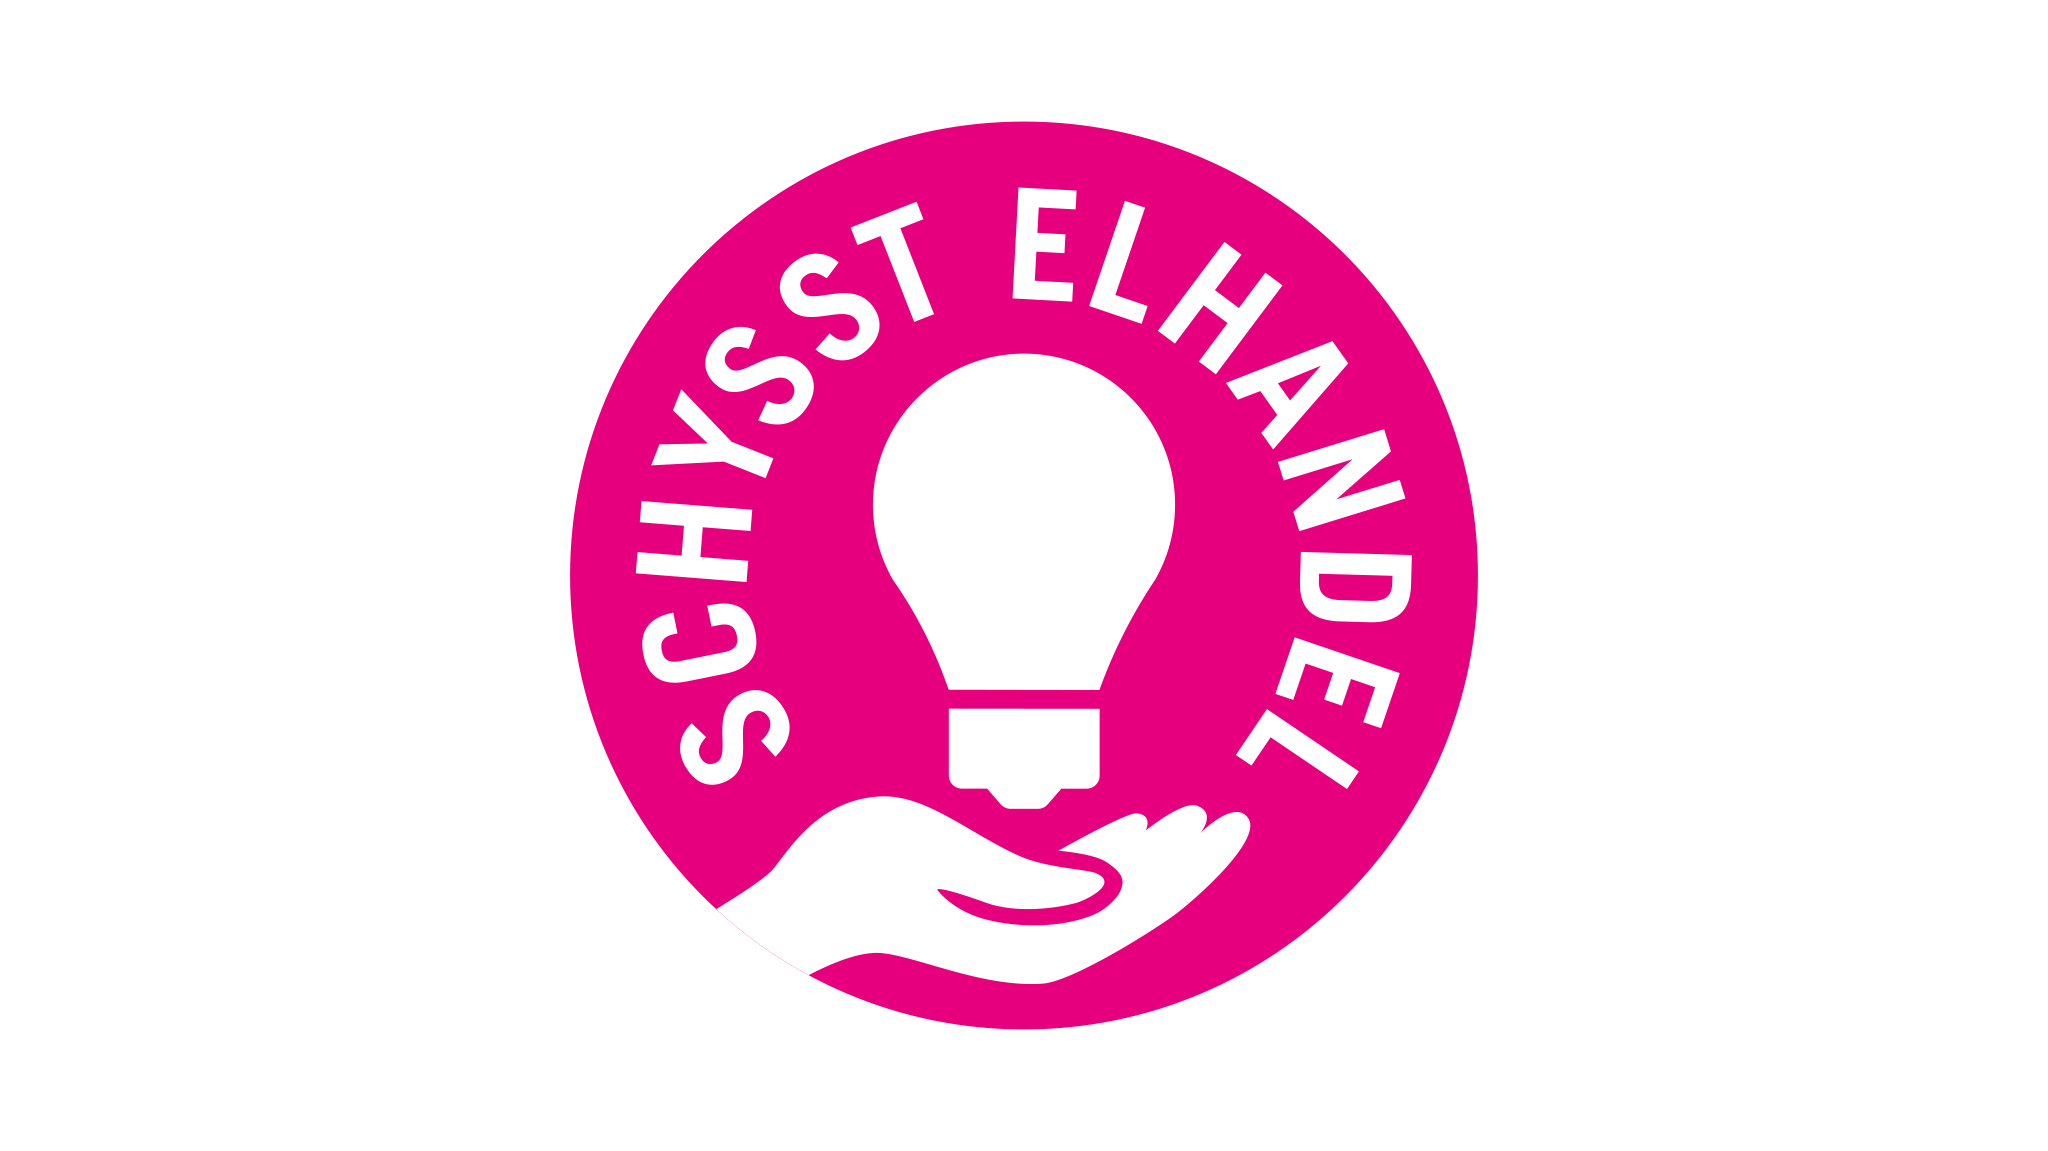 Logo_schysst-elhandel.jpg